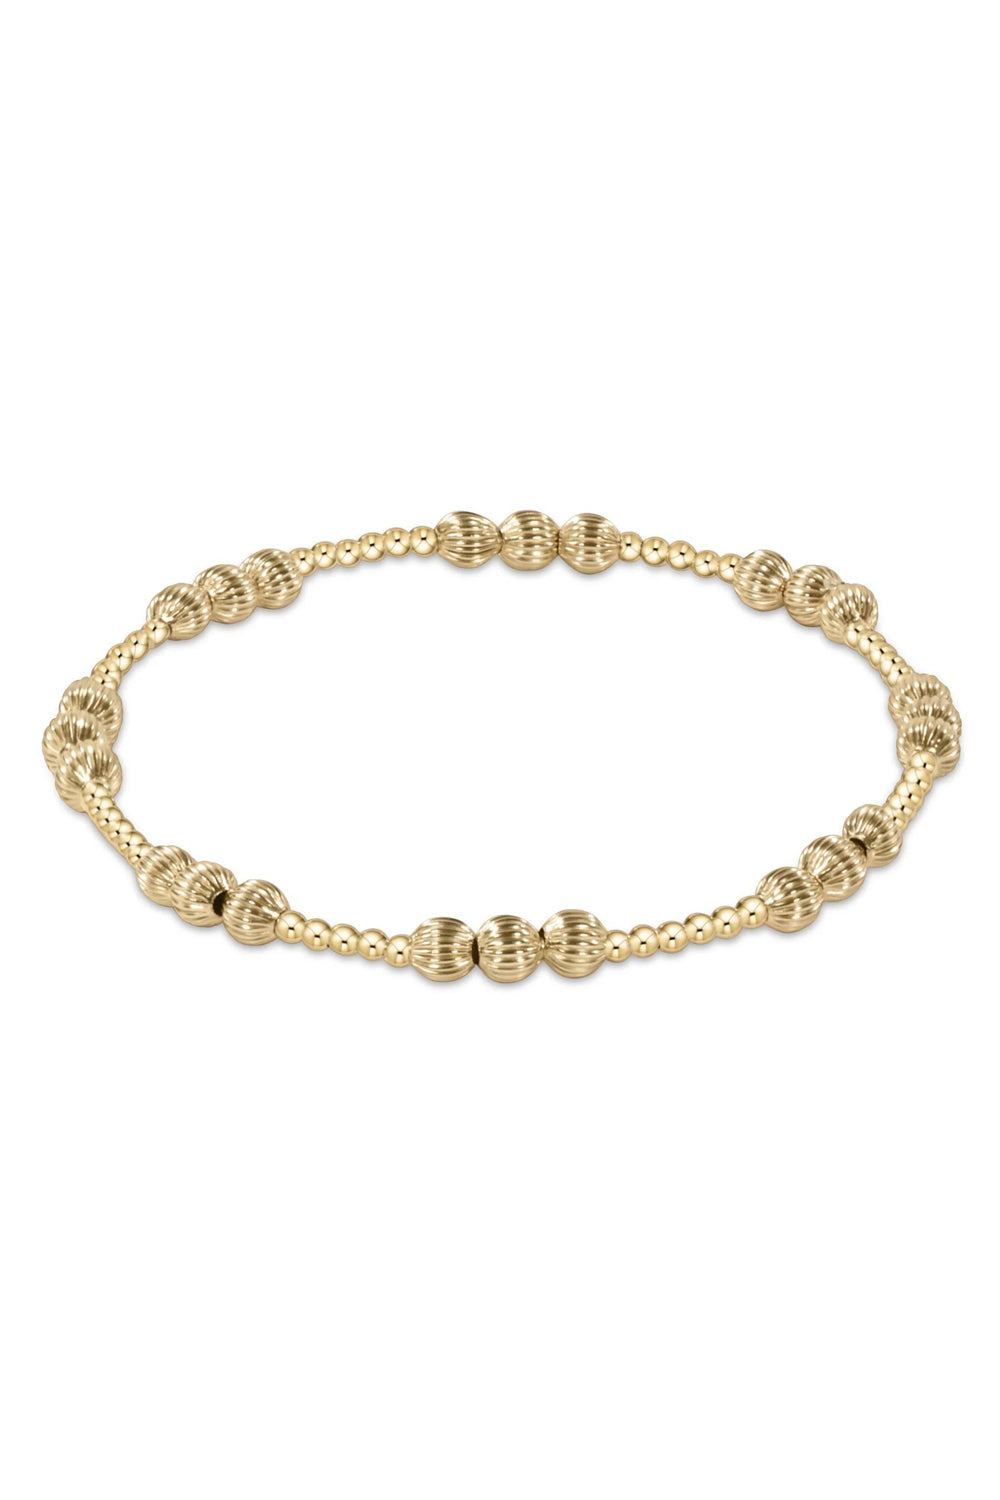 enewton: Dignity Joy Pattern 4mm Bead Bracelet - Gold | Makk Fashions